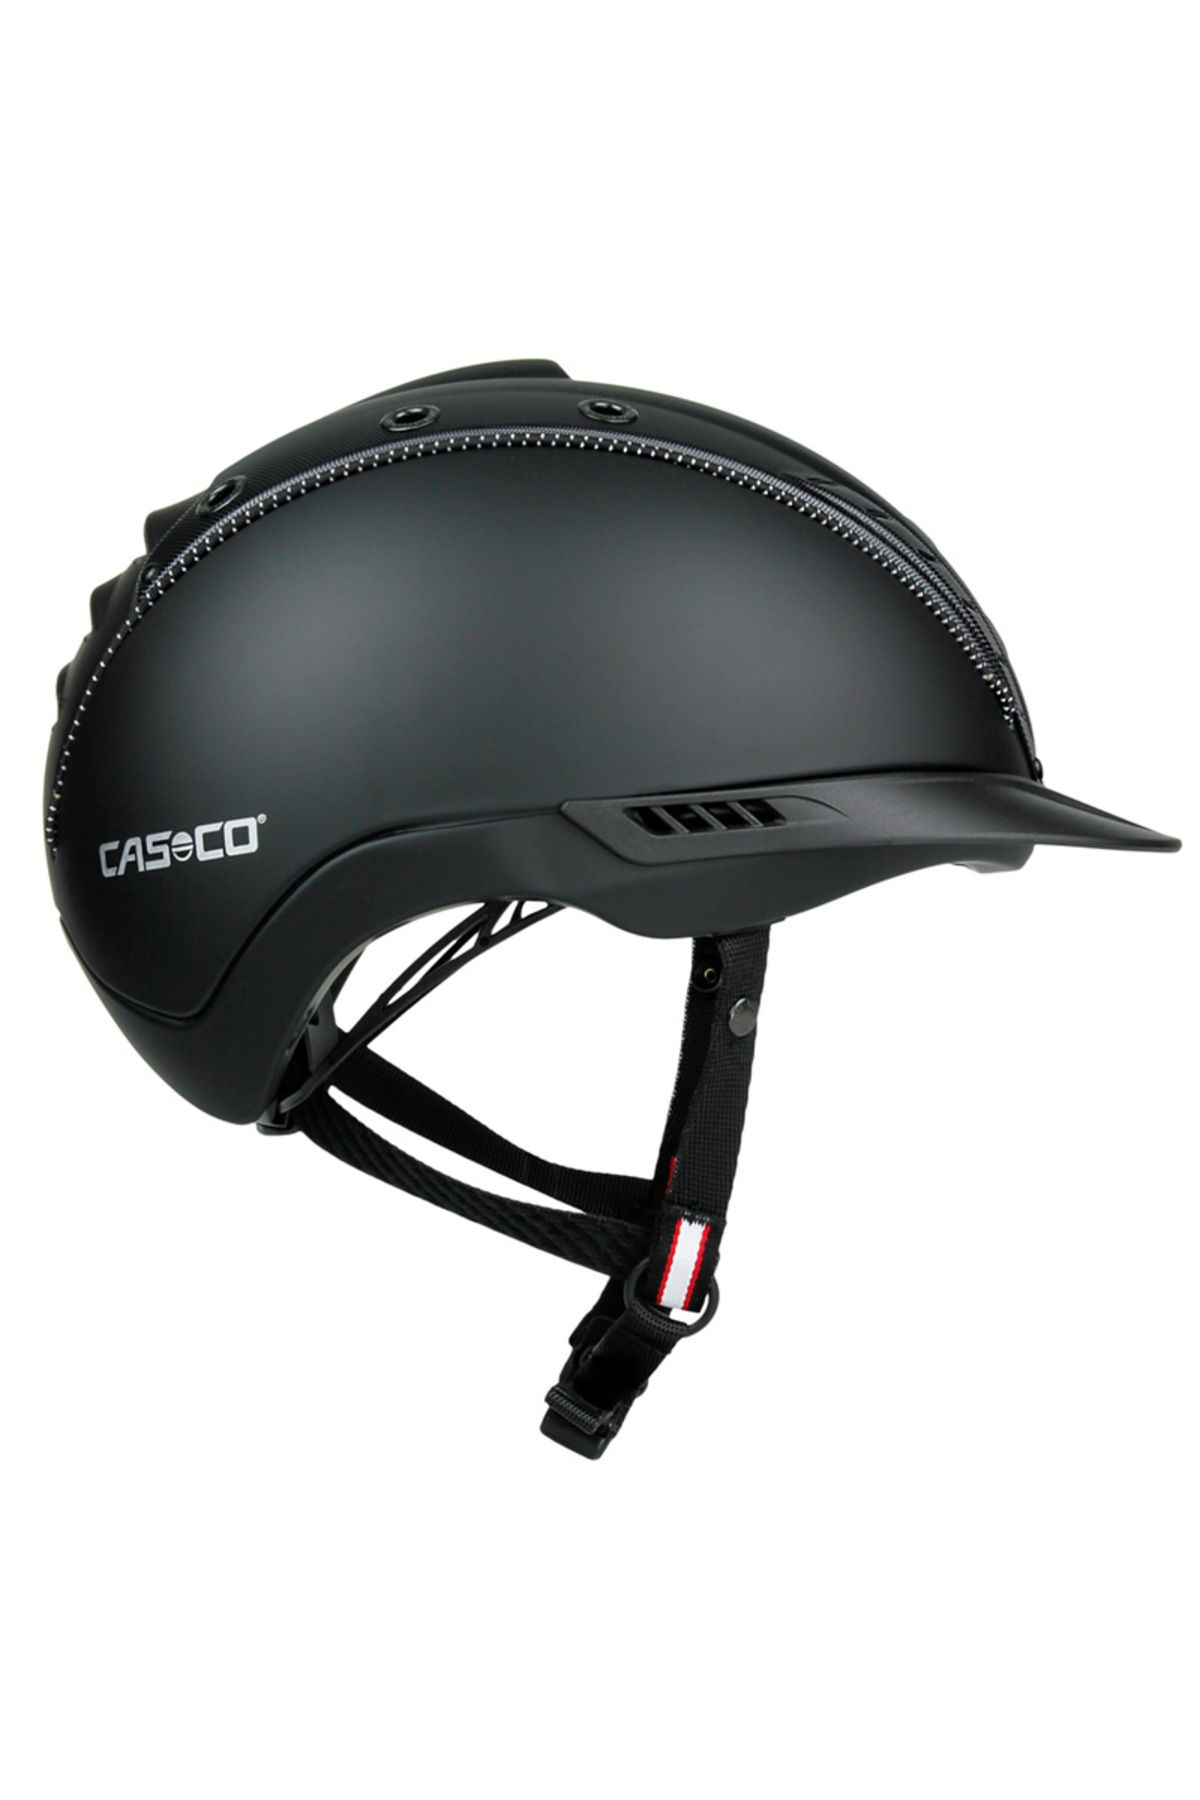 Casco TOG - CASCO MISTRALL-2 EDITION Riding Helmet L (58-60)